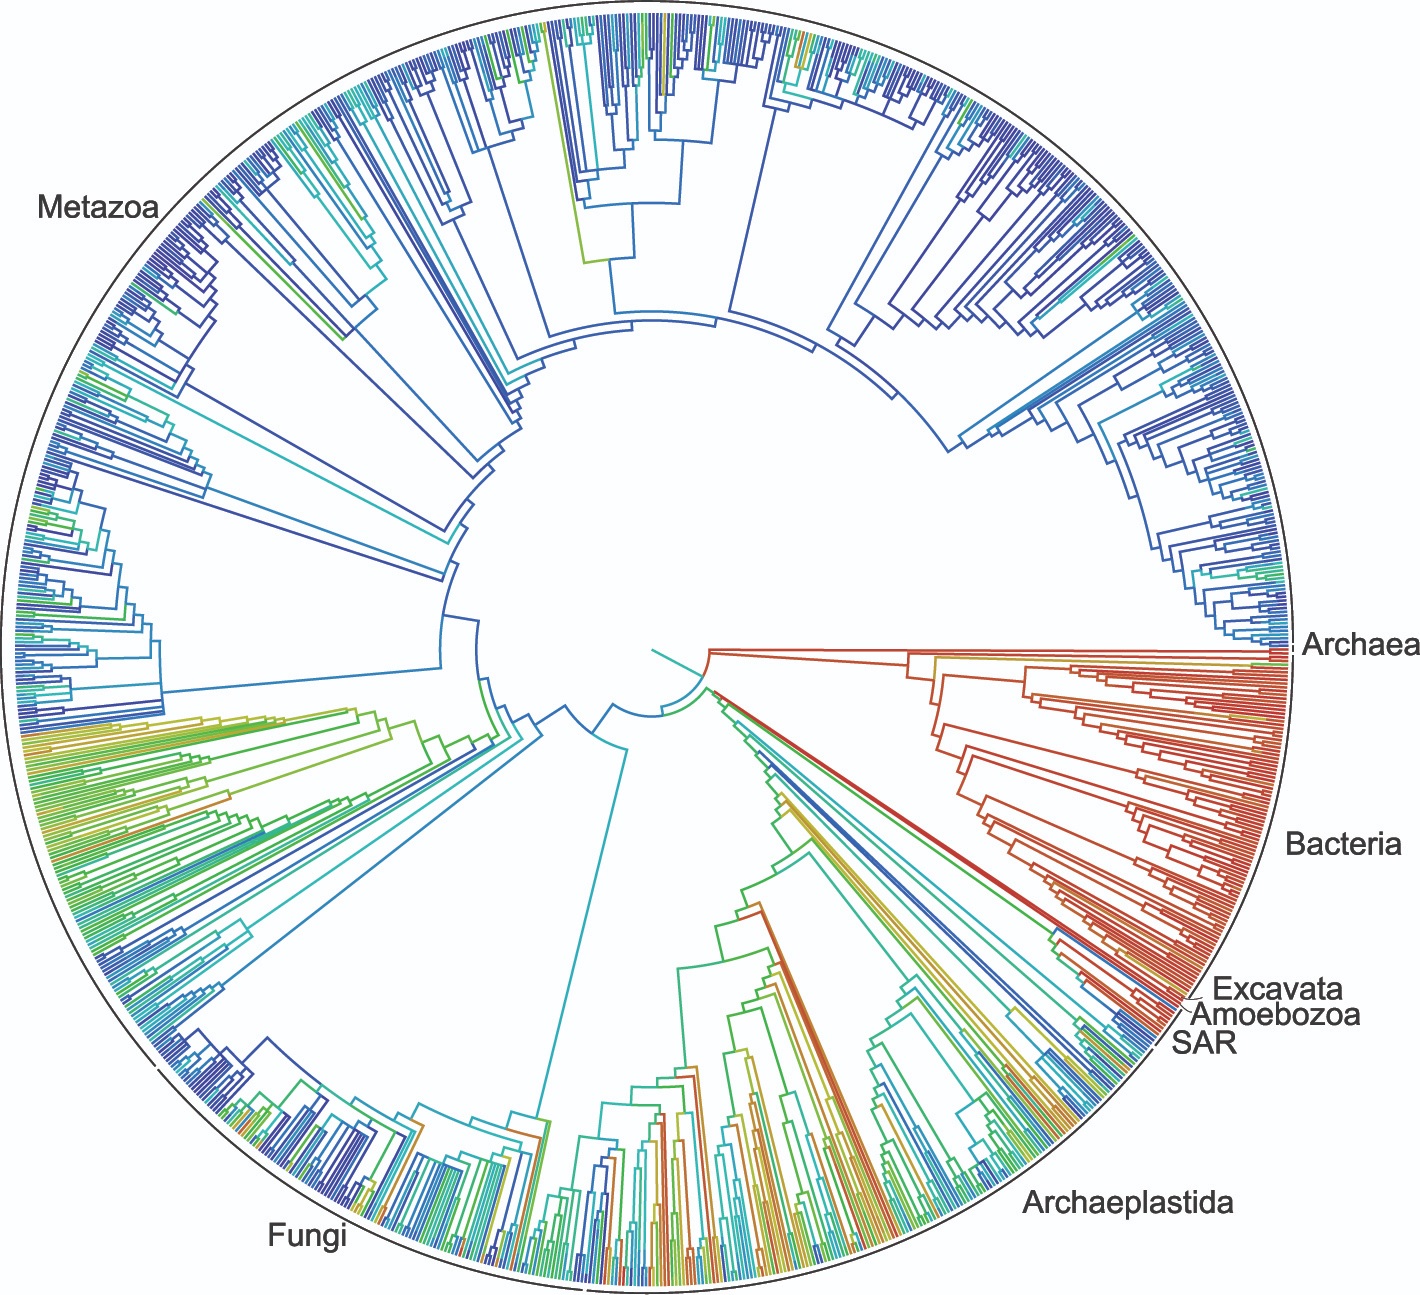 Circular family tree of Earth's lifeforms